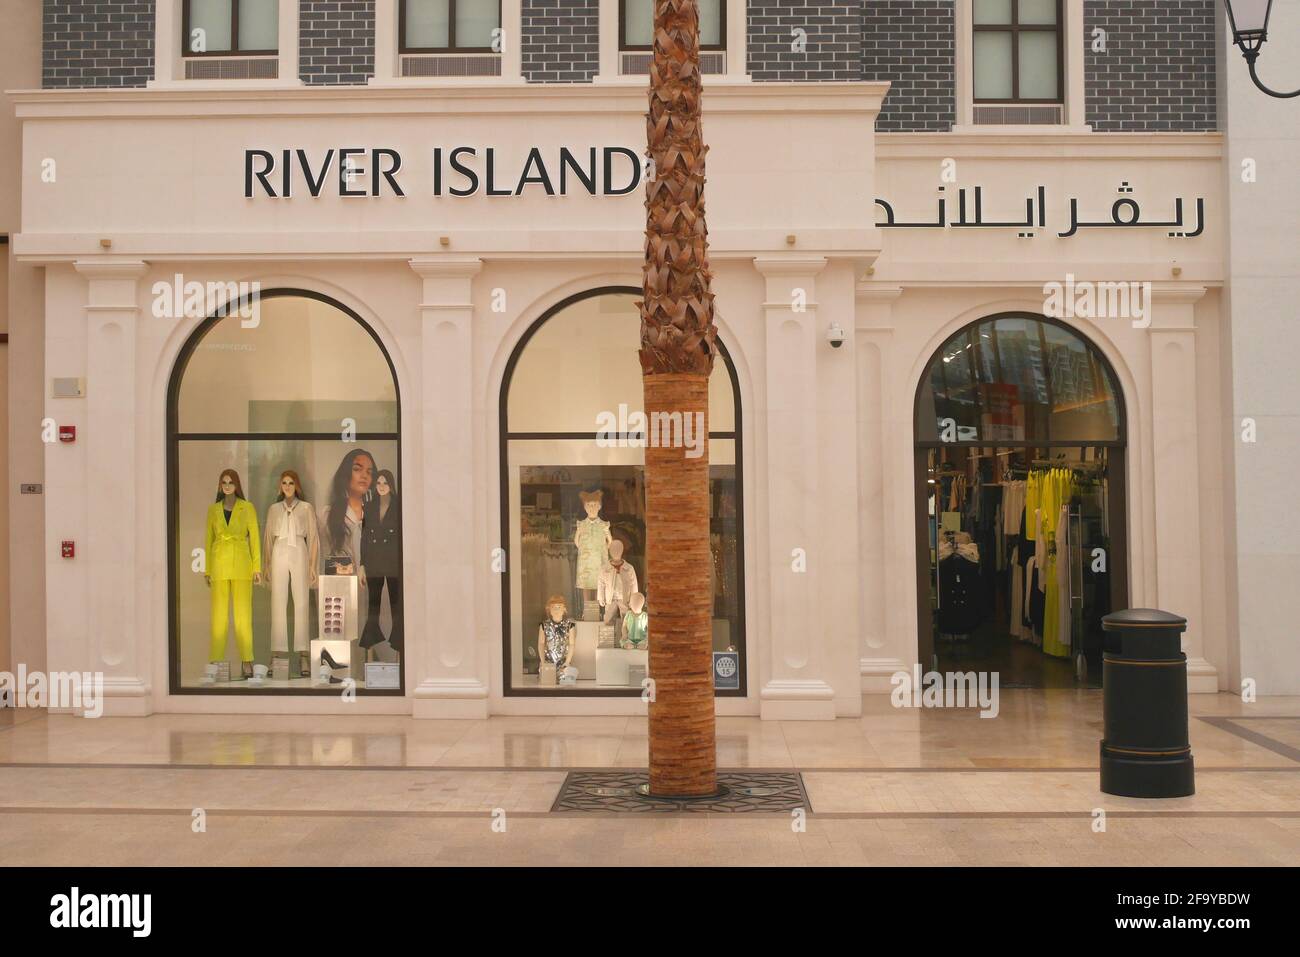 River Island clothing store, The Avenues Mall, Manama, Kingdom of Bahrain Stock Photo